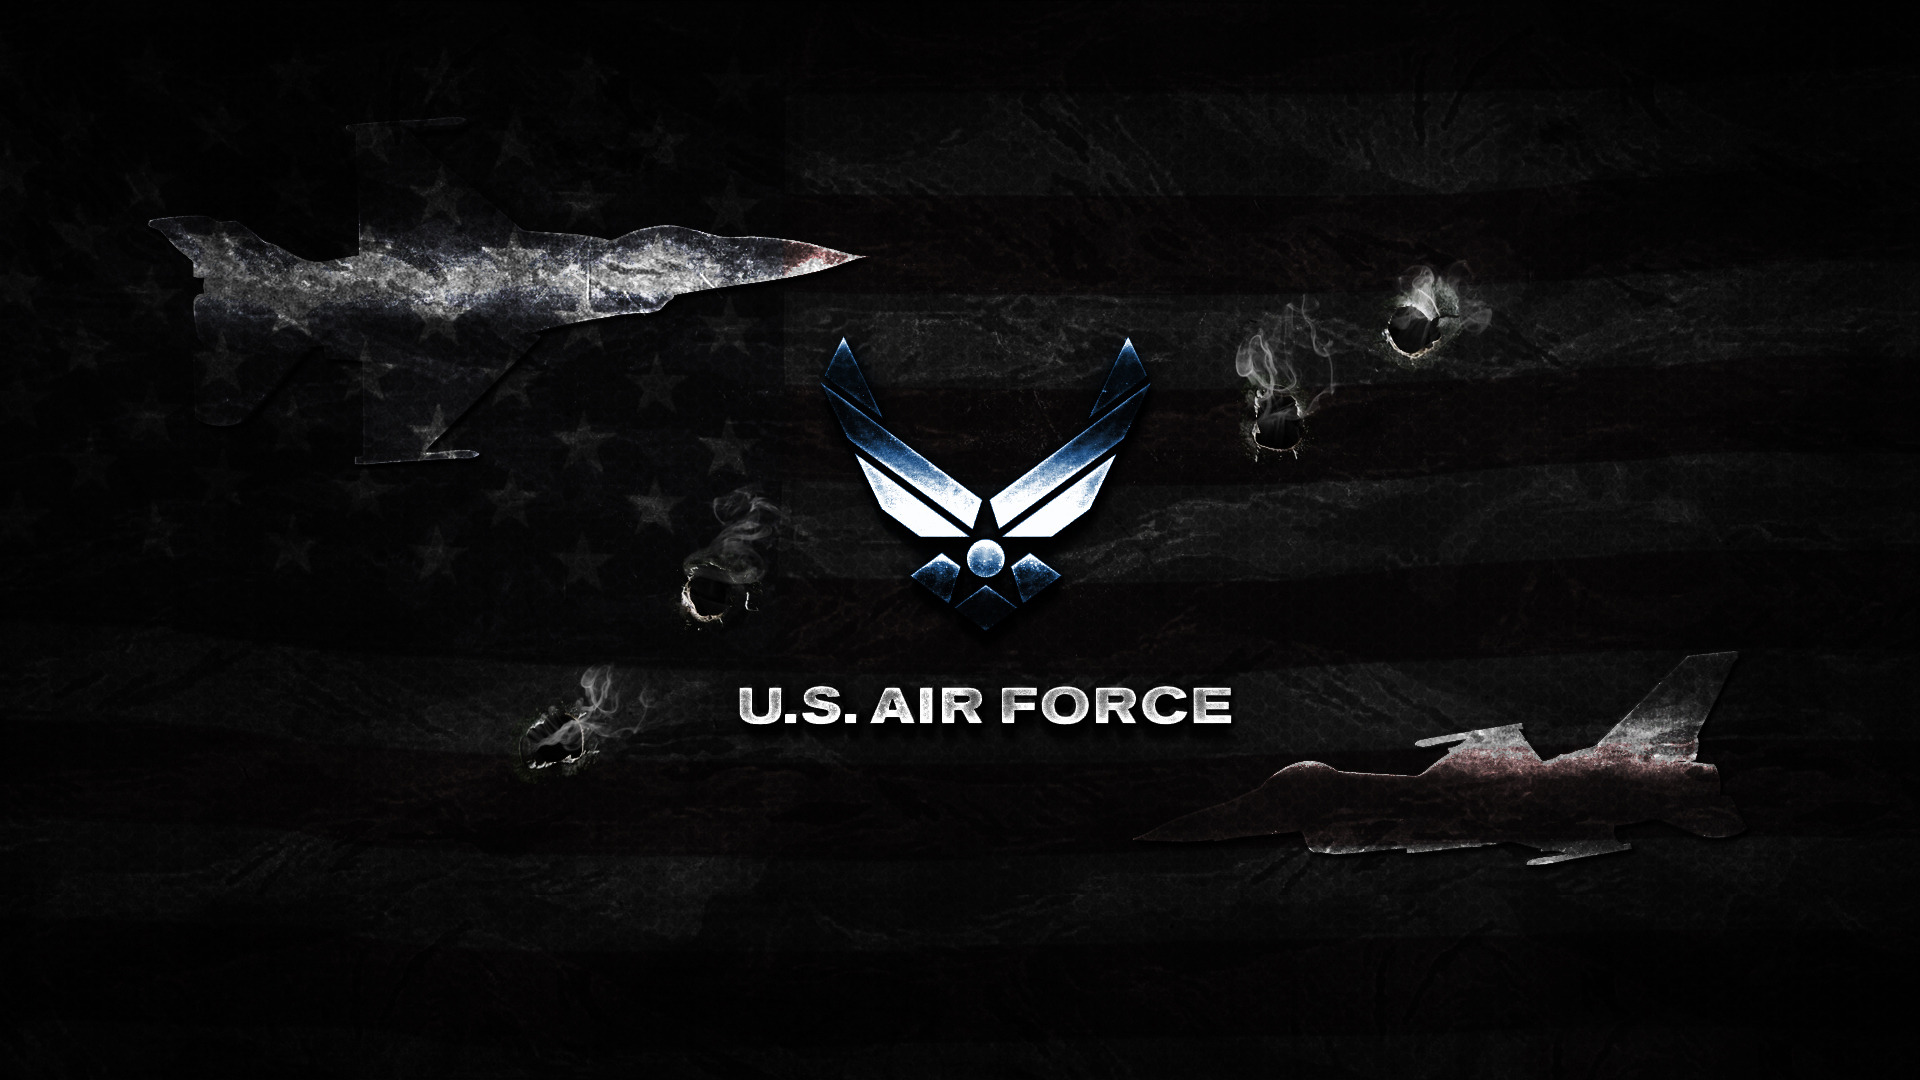 Air Force logo wallpaper 19266 1920x1080